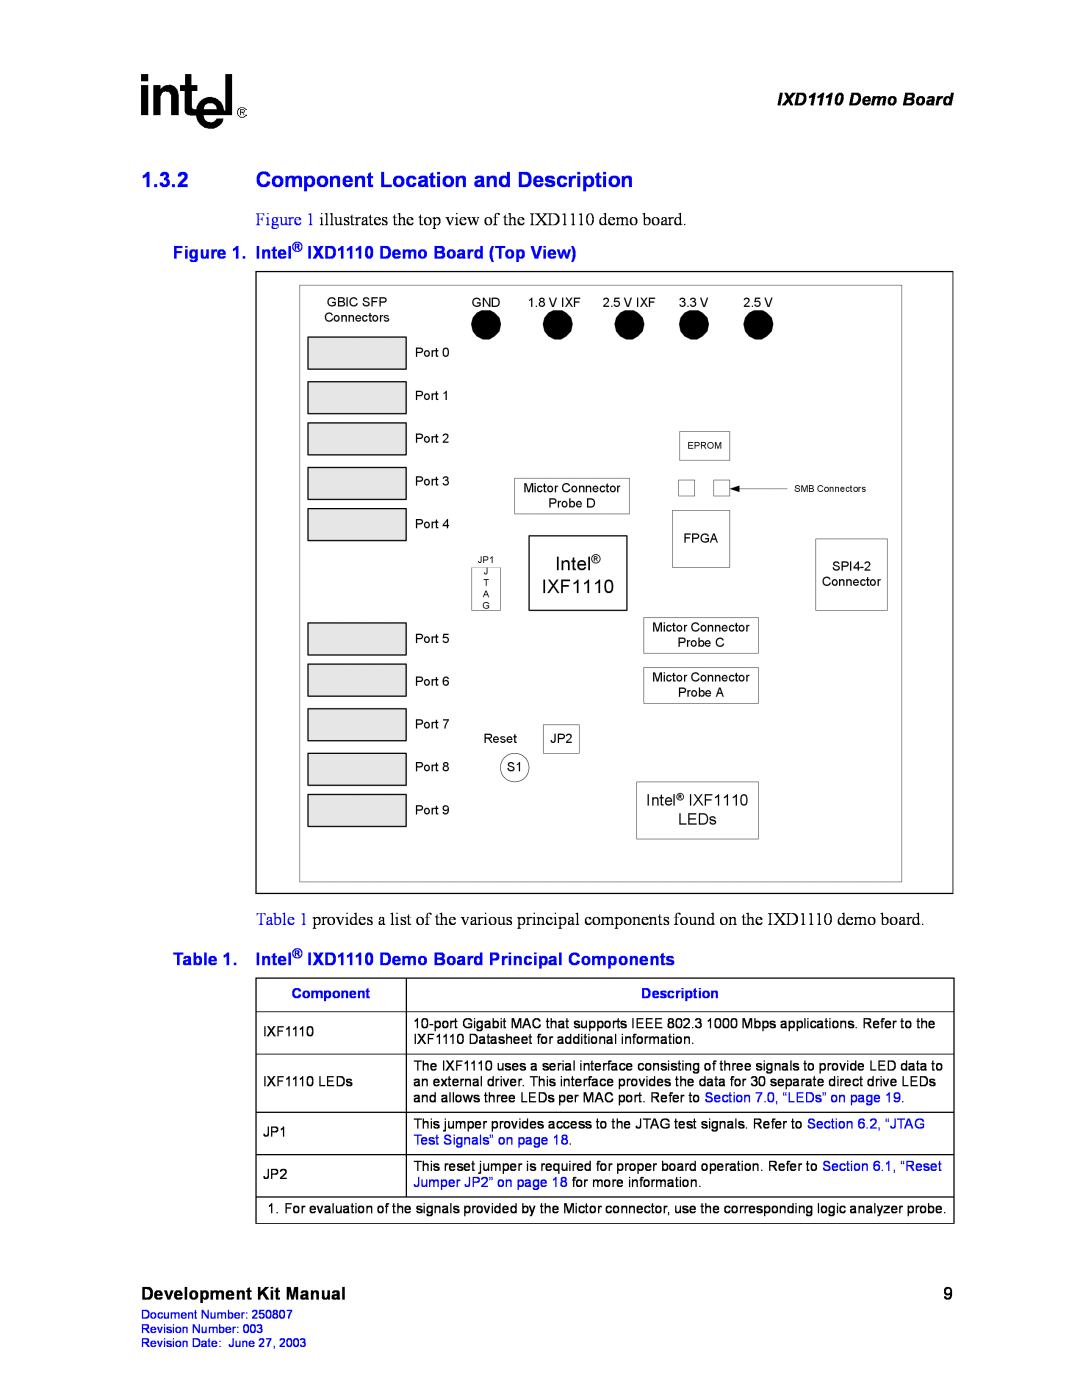 Intel manual Component Location and Description, Intel IXD1110 Demo Board Top View, IXF1110, Development Kit Manual 